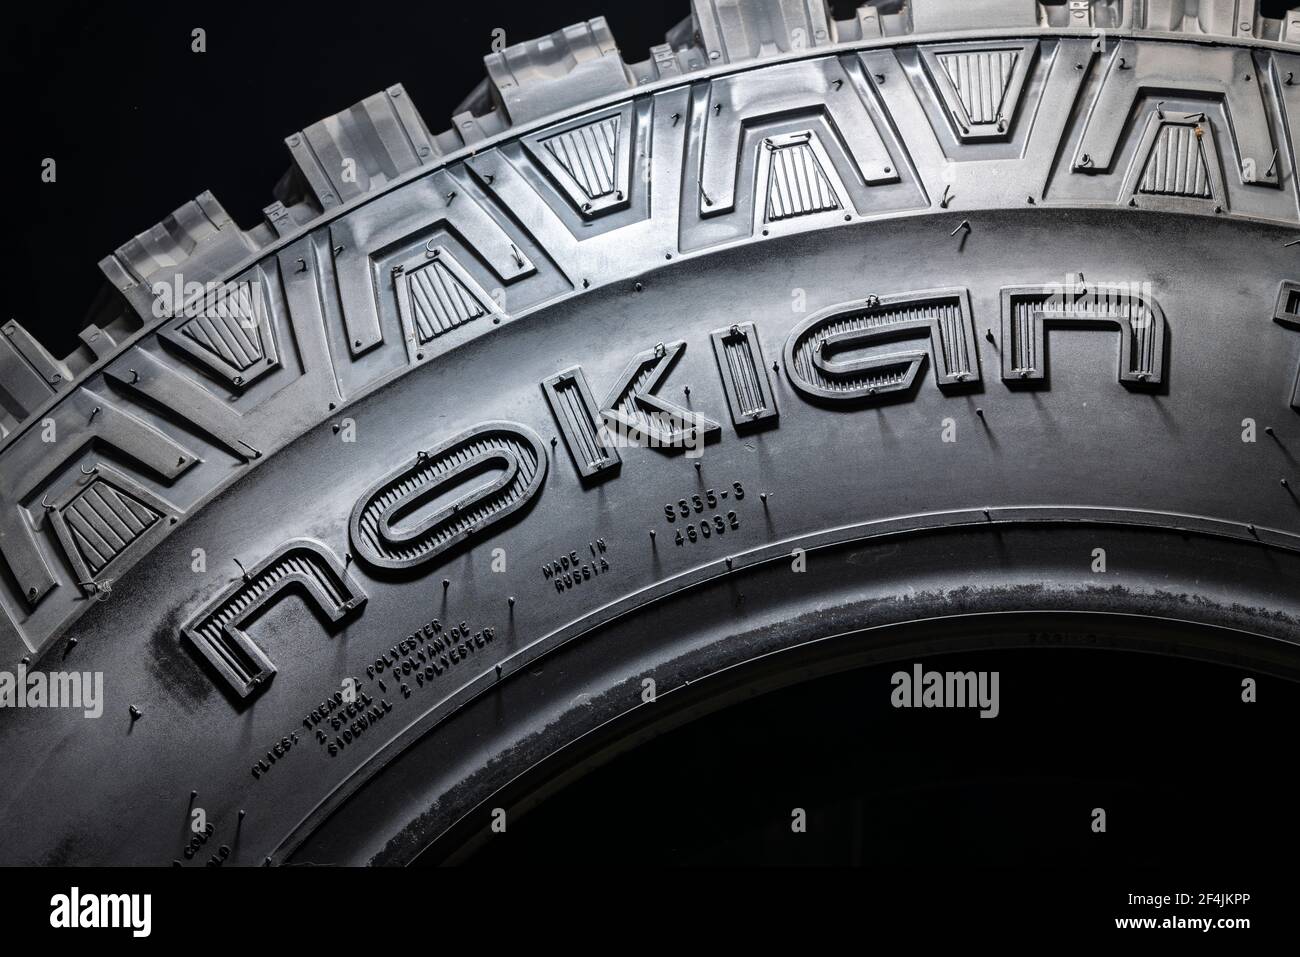 Pneumatici Nokian, pneumatici nokian Rockprof con logo, vista laterale. Krasnoyarsk, Russia, 21 marzo 2021. Foto Stock